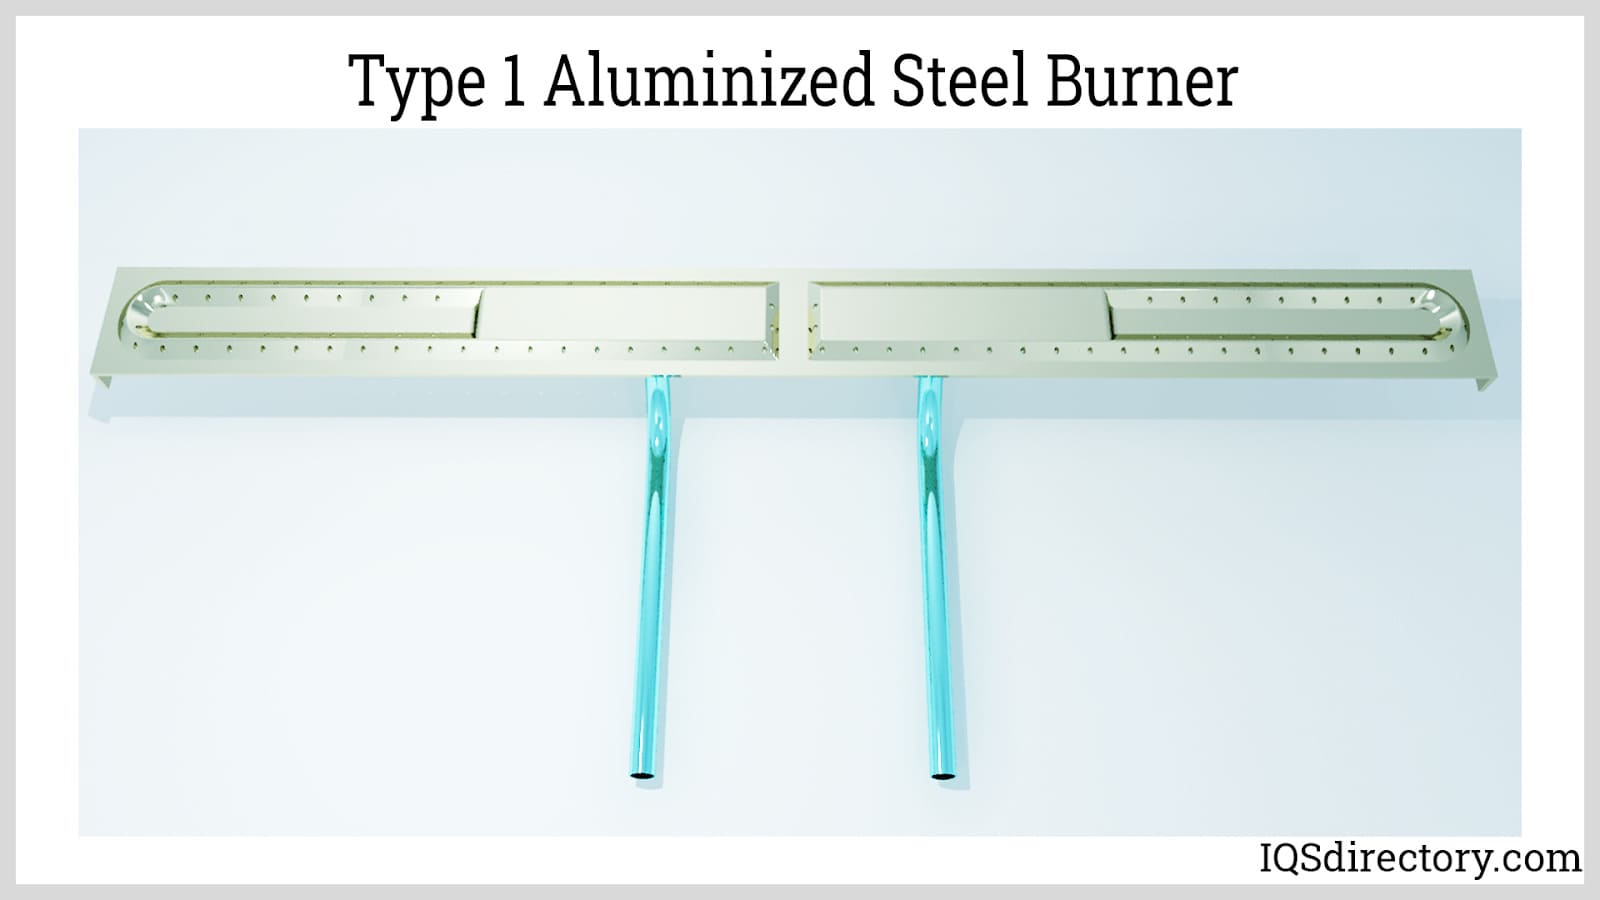 Type 1 Aluminized Steel Burner